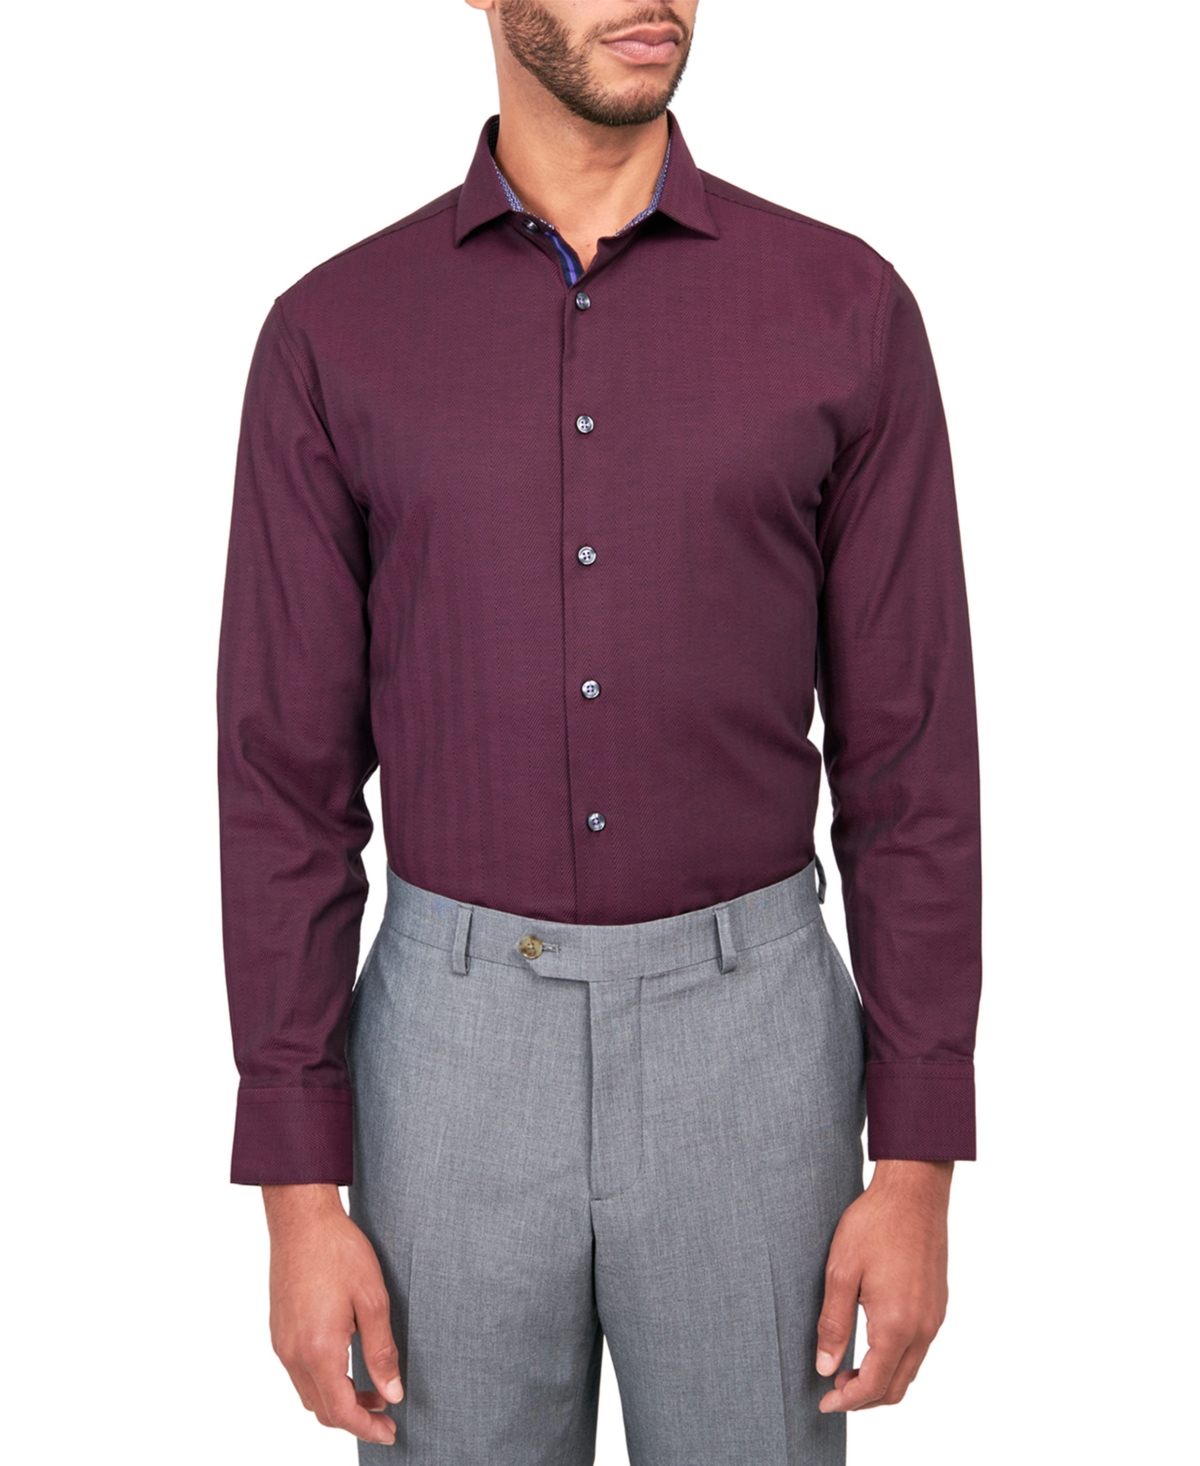 Men's Solid Herringbone Shirt - Burgundy